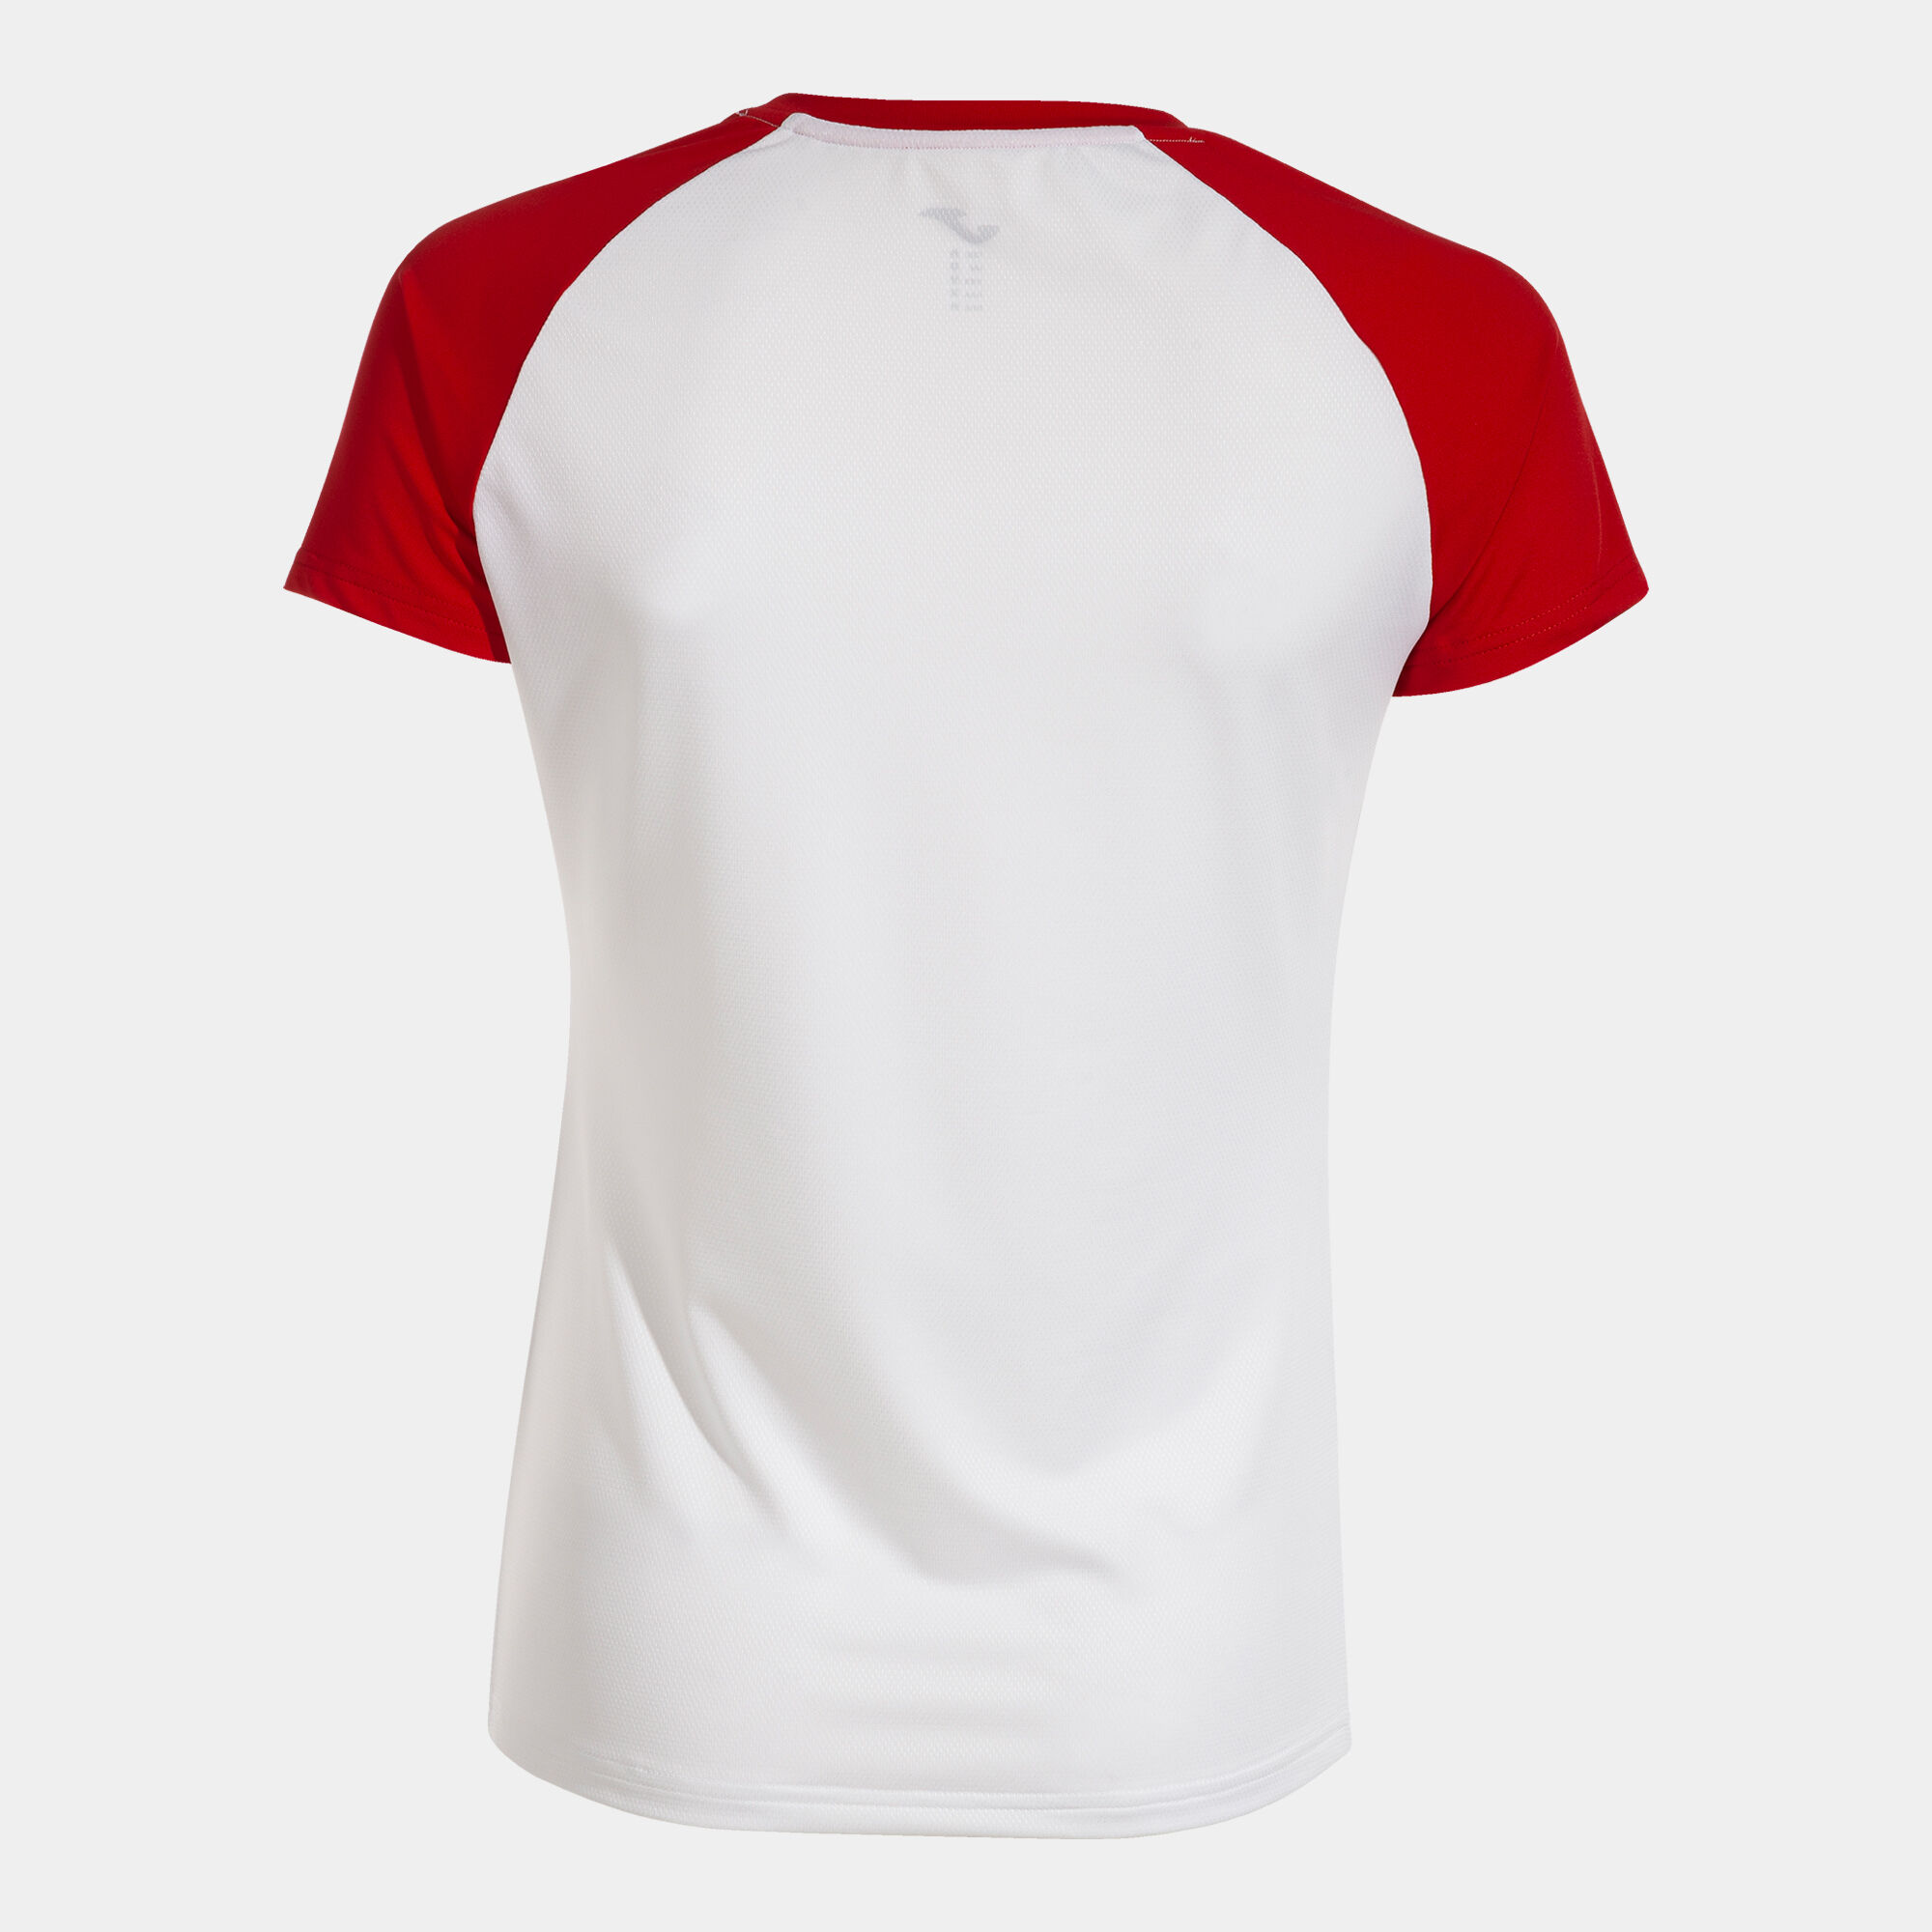 Camiseta manga corta mujer Elite X blanco rojo